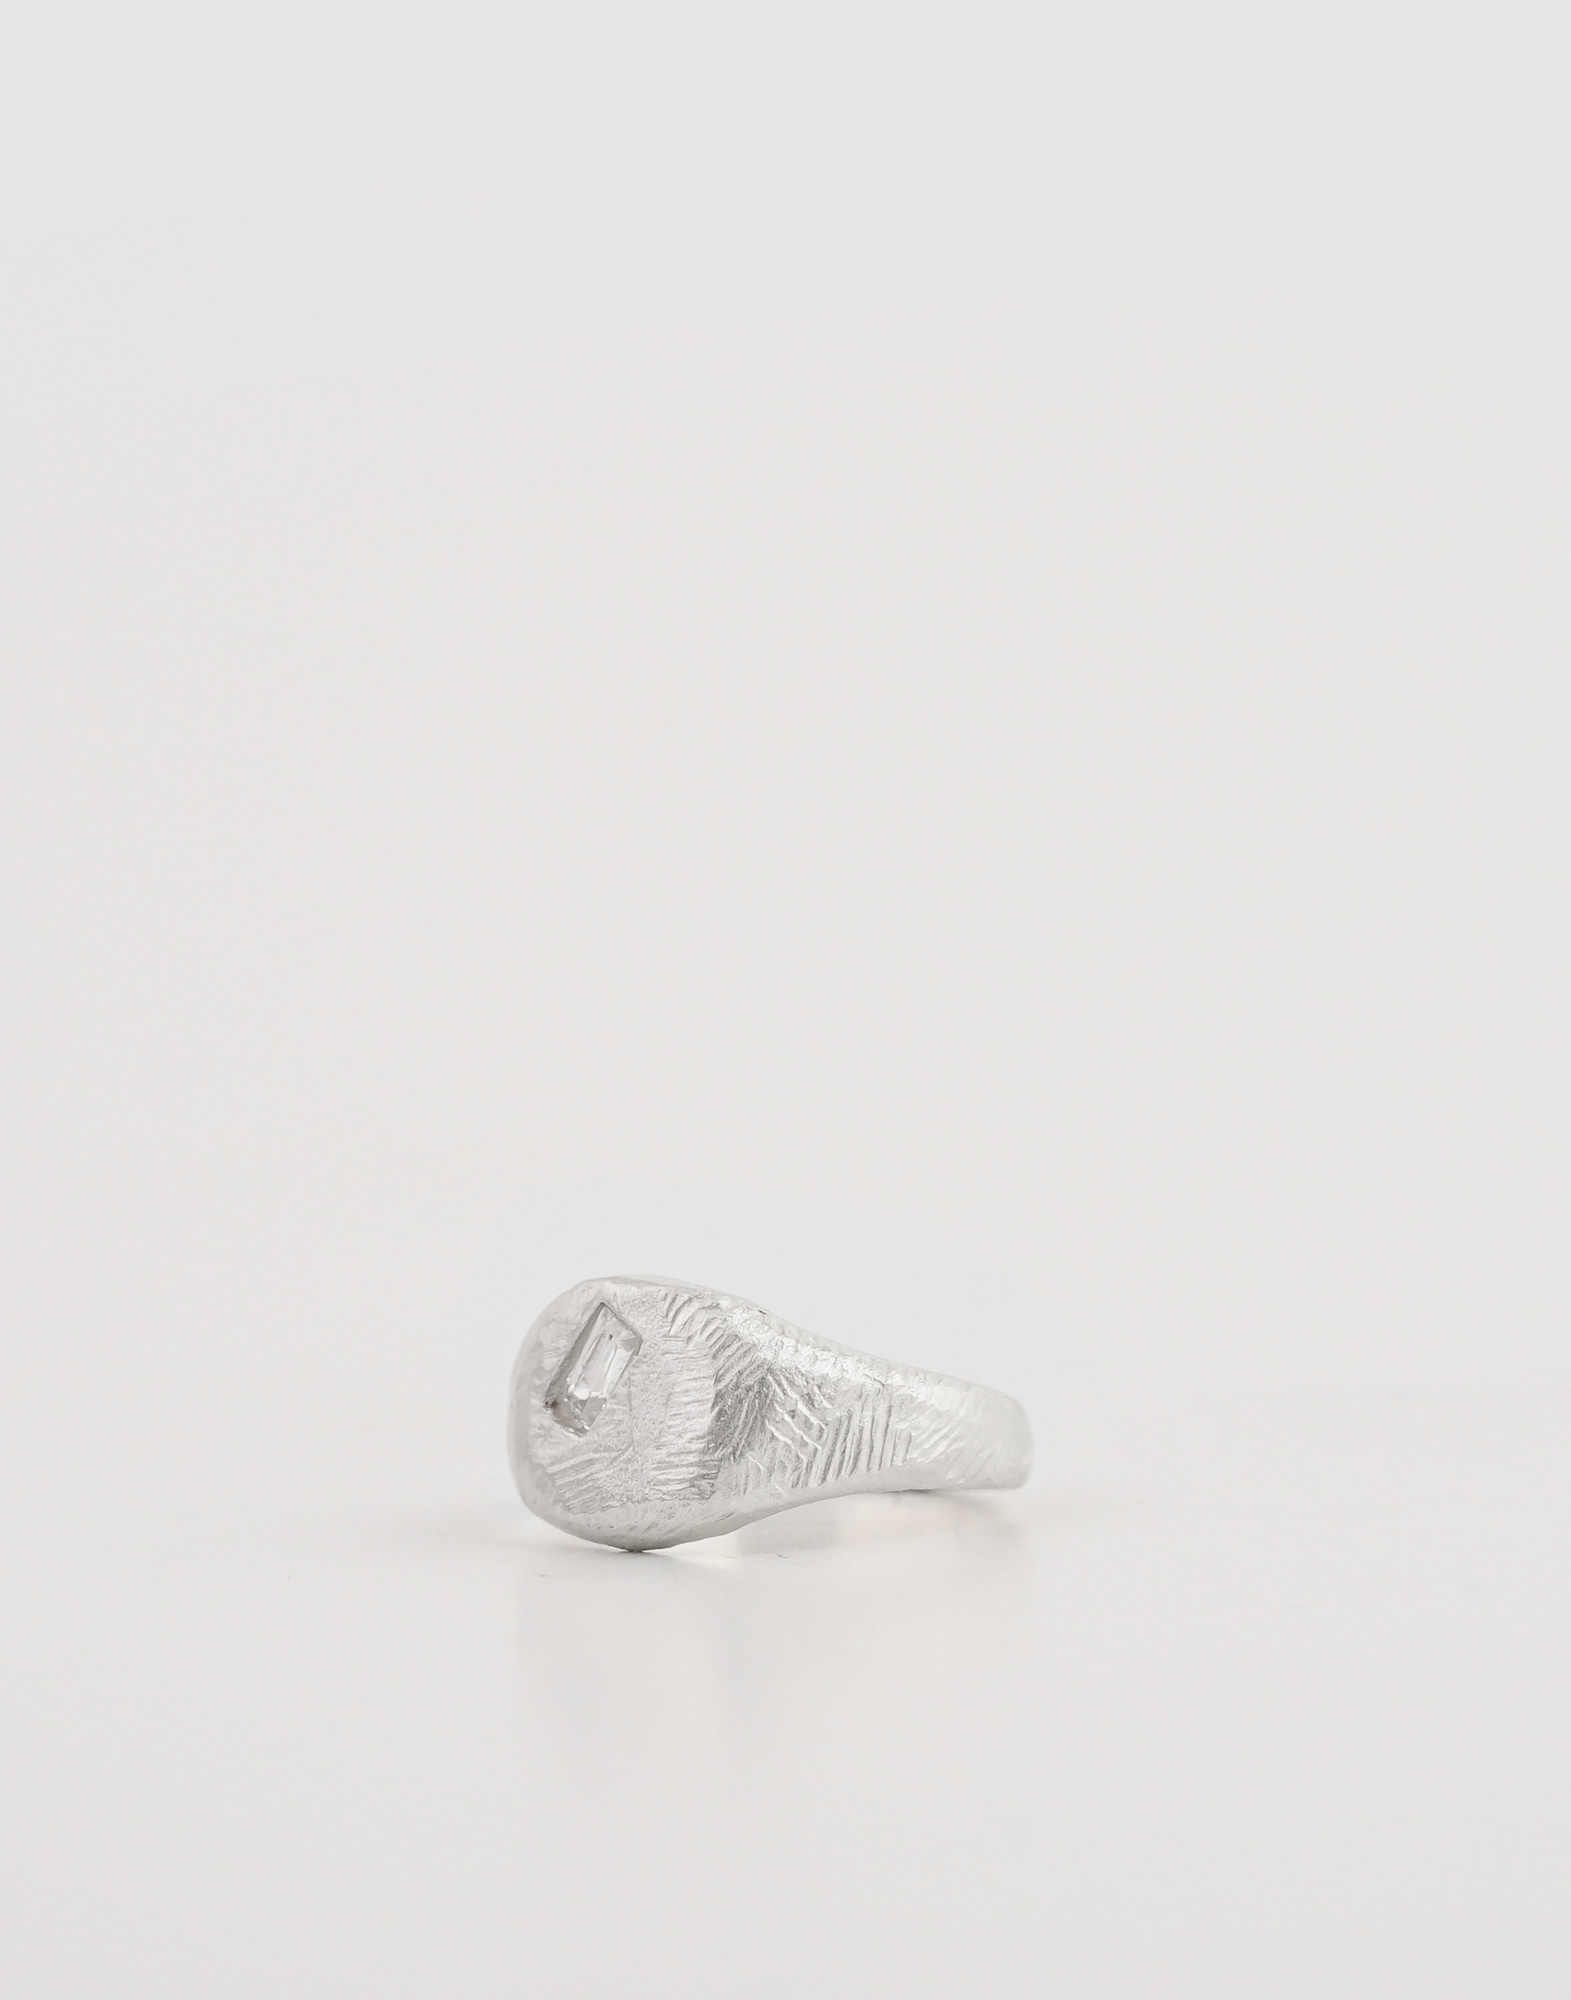 Signet ring (white crystal)